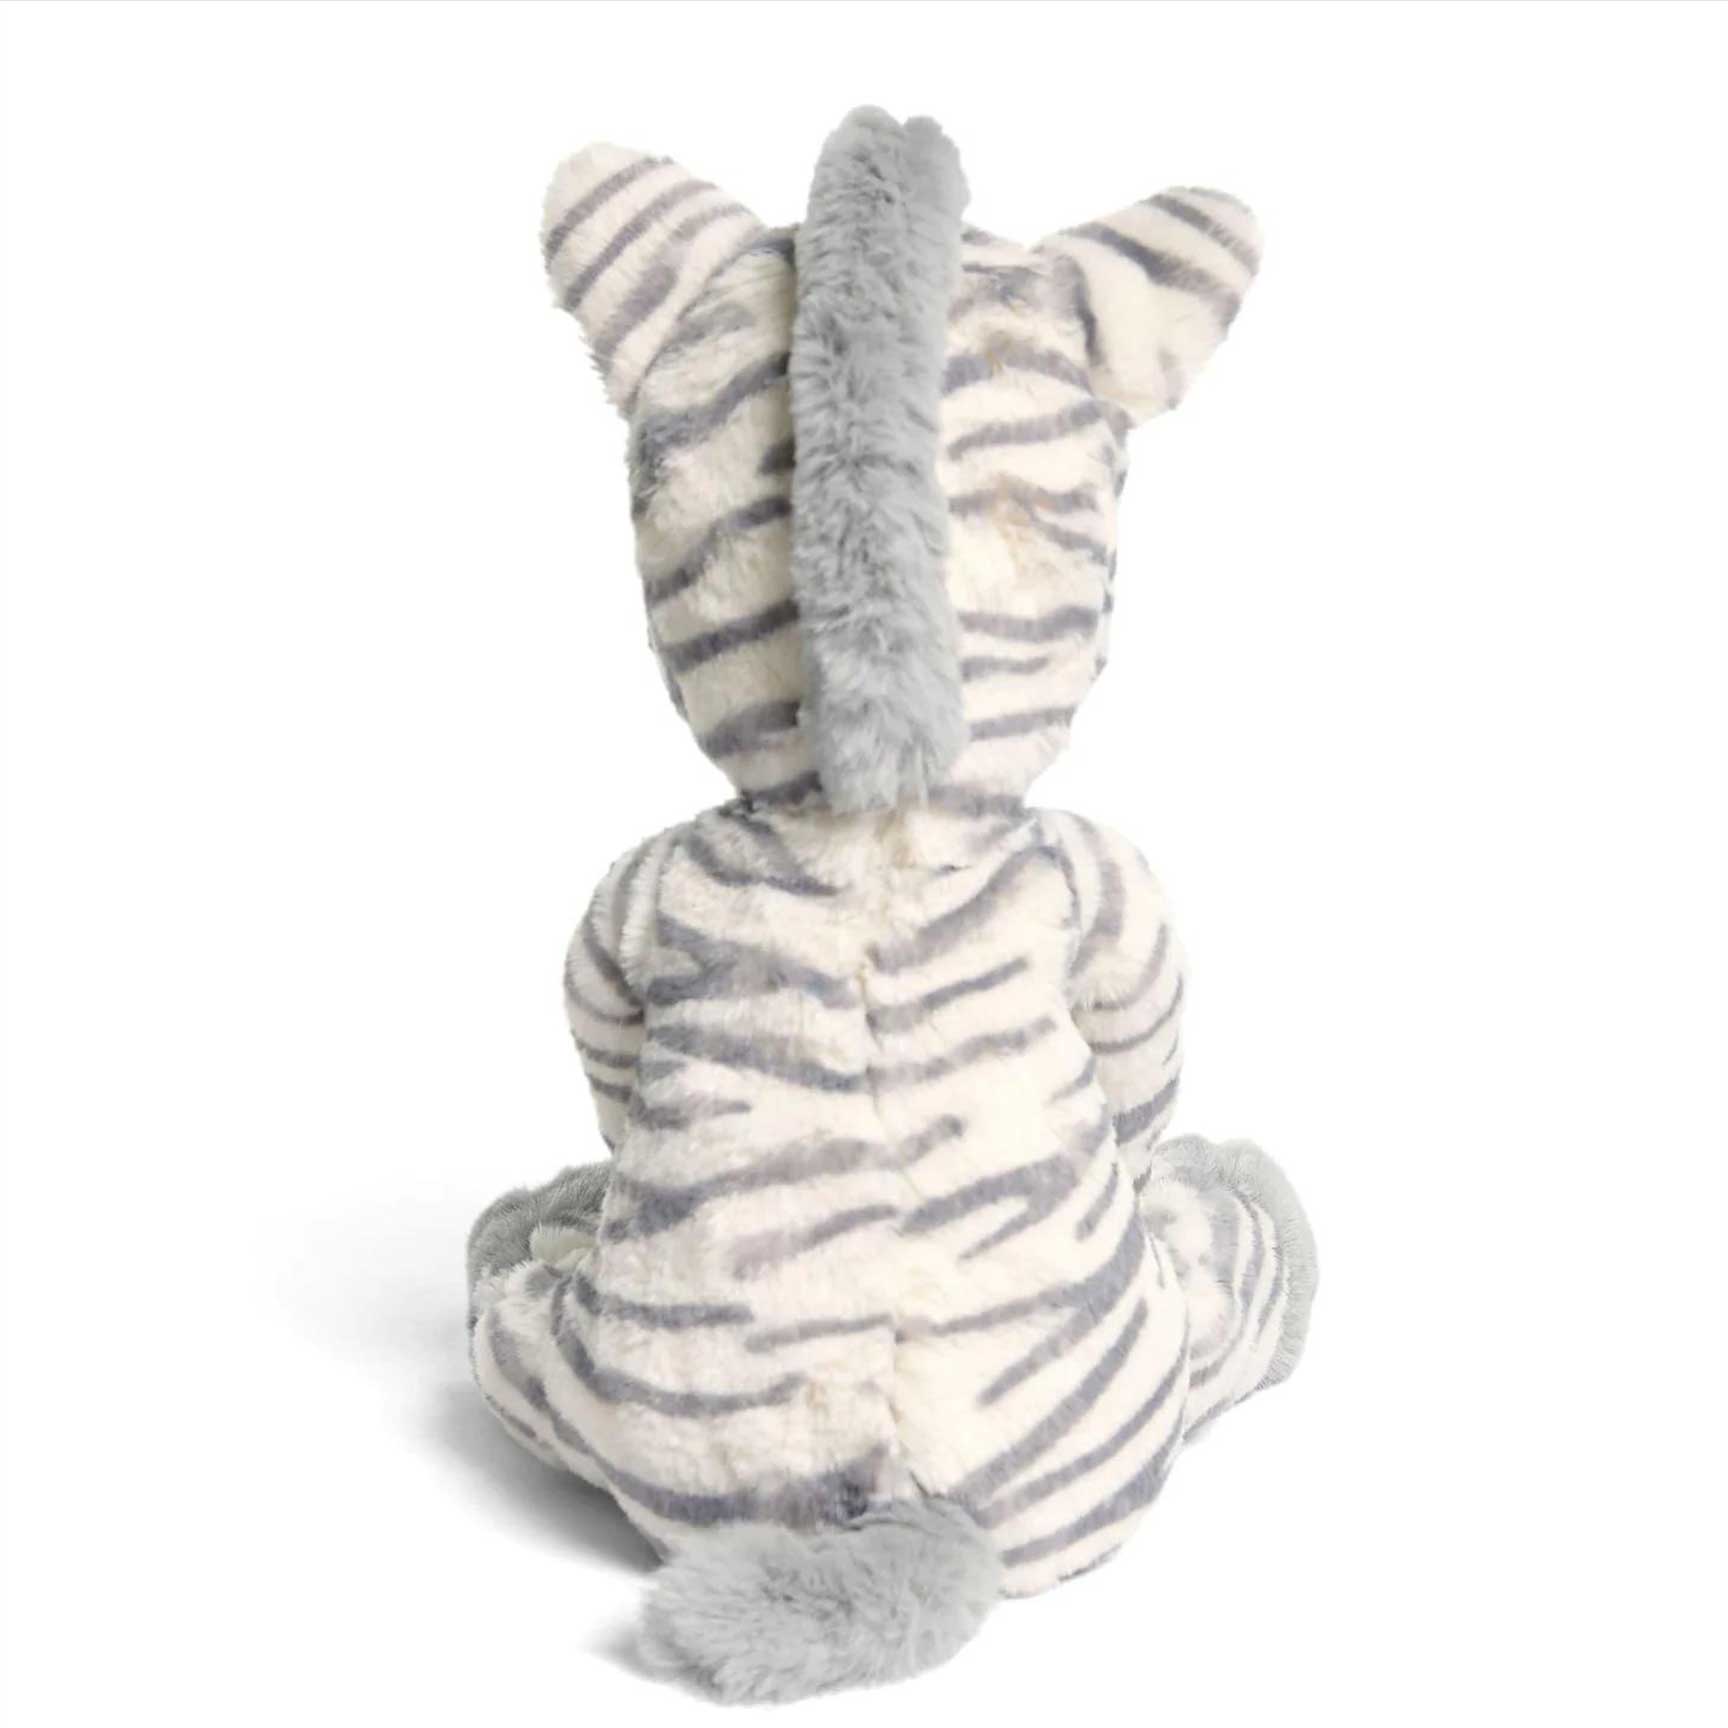 Mamas & Papas soft animals Mamas & Papas Soft Toy Welcome to the World in Zebra 4855WW206